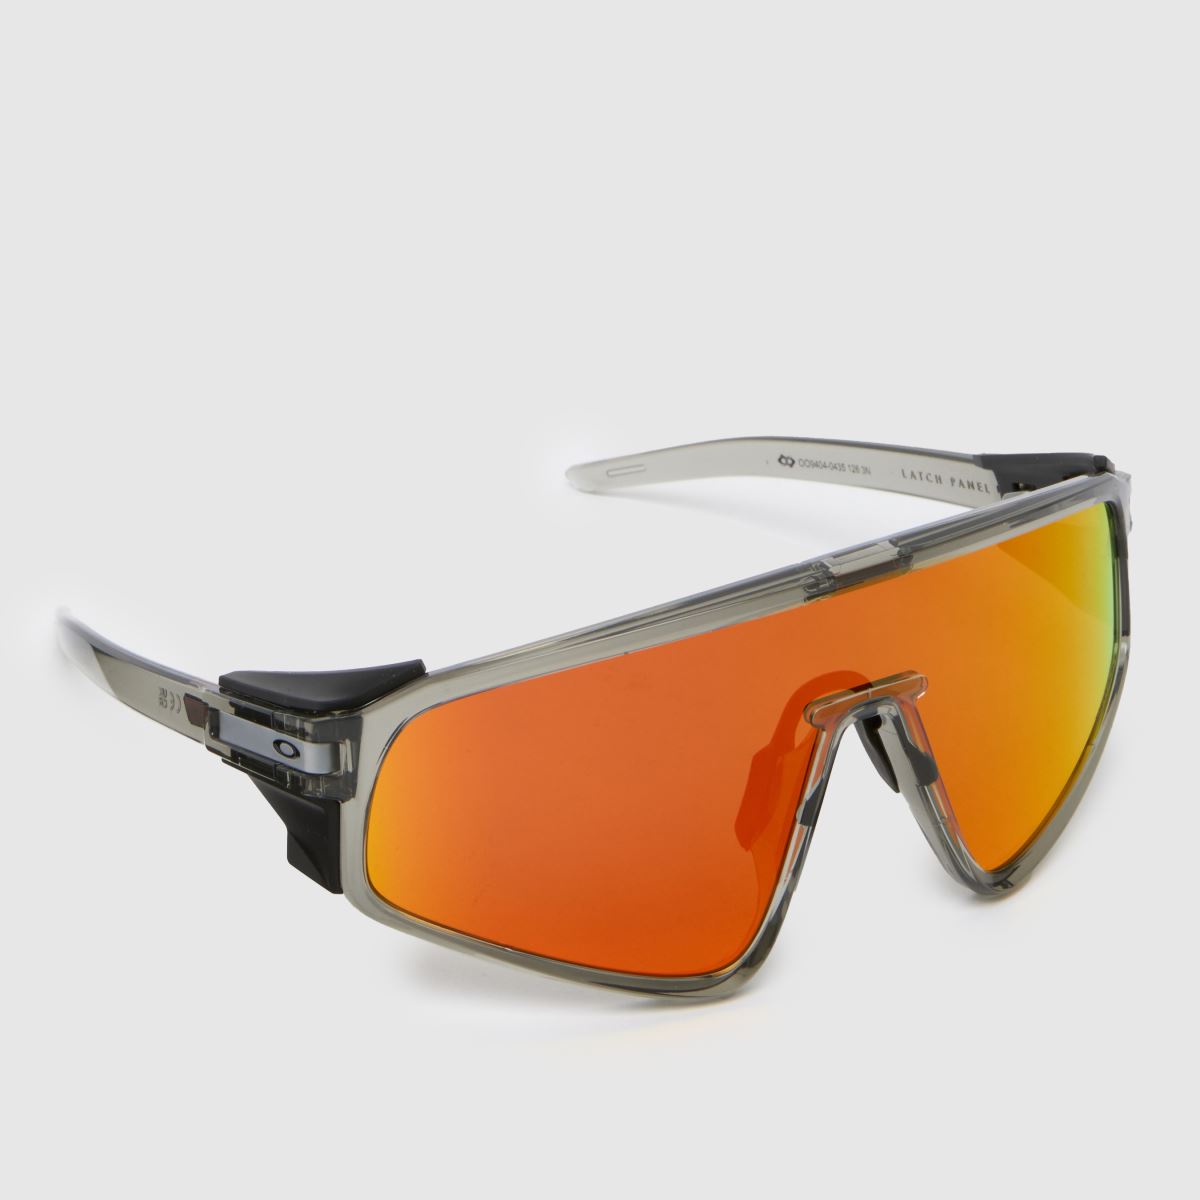 Oakley grey latch panel sunglasses